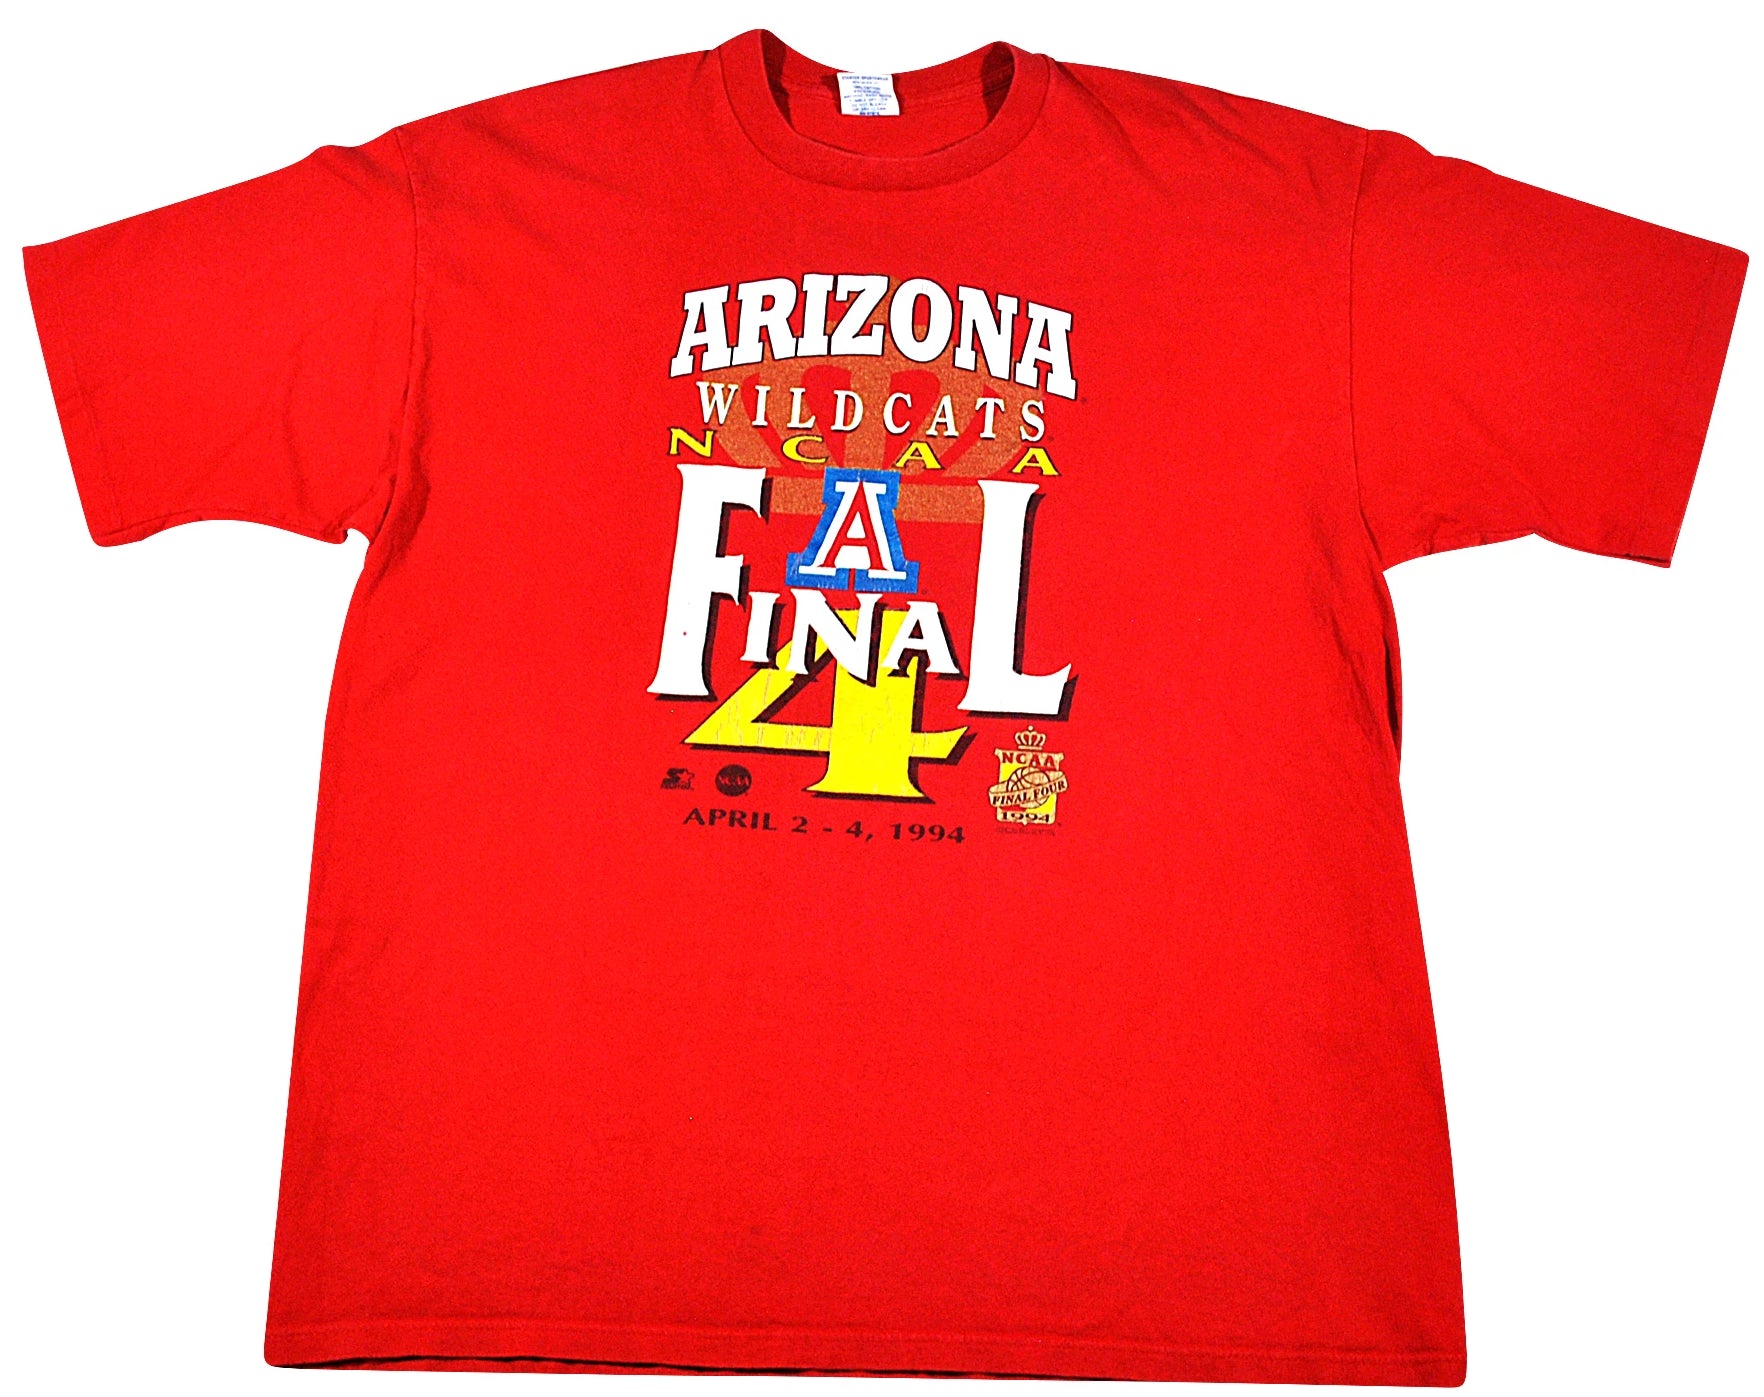 Arizona Wildcats Final Four jersey